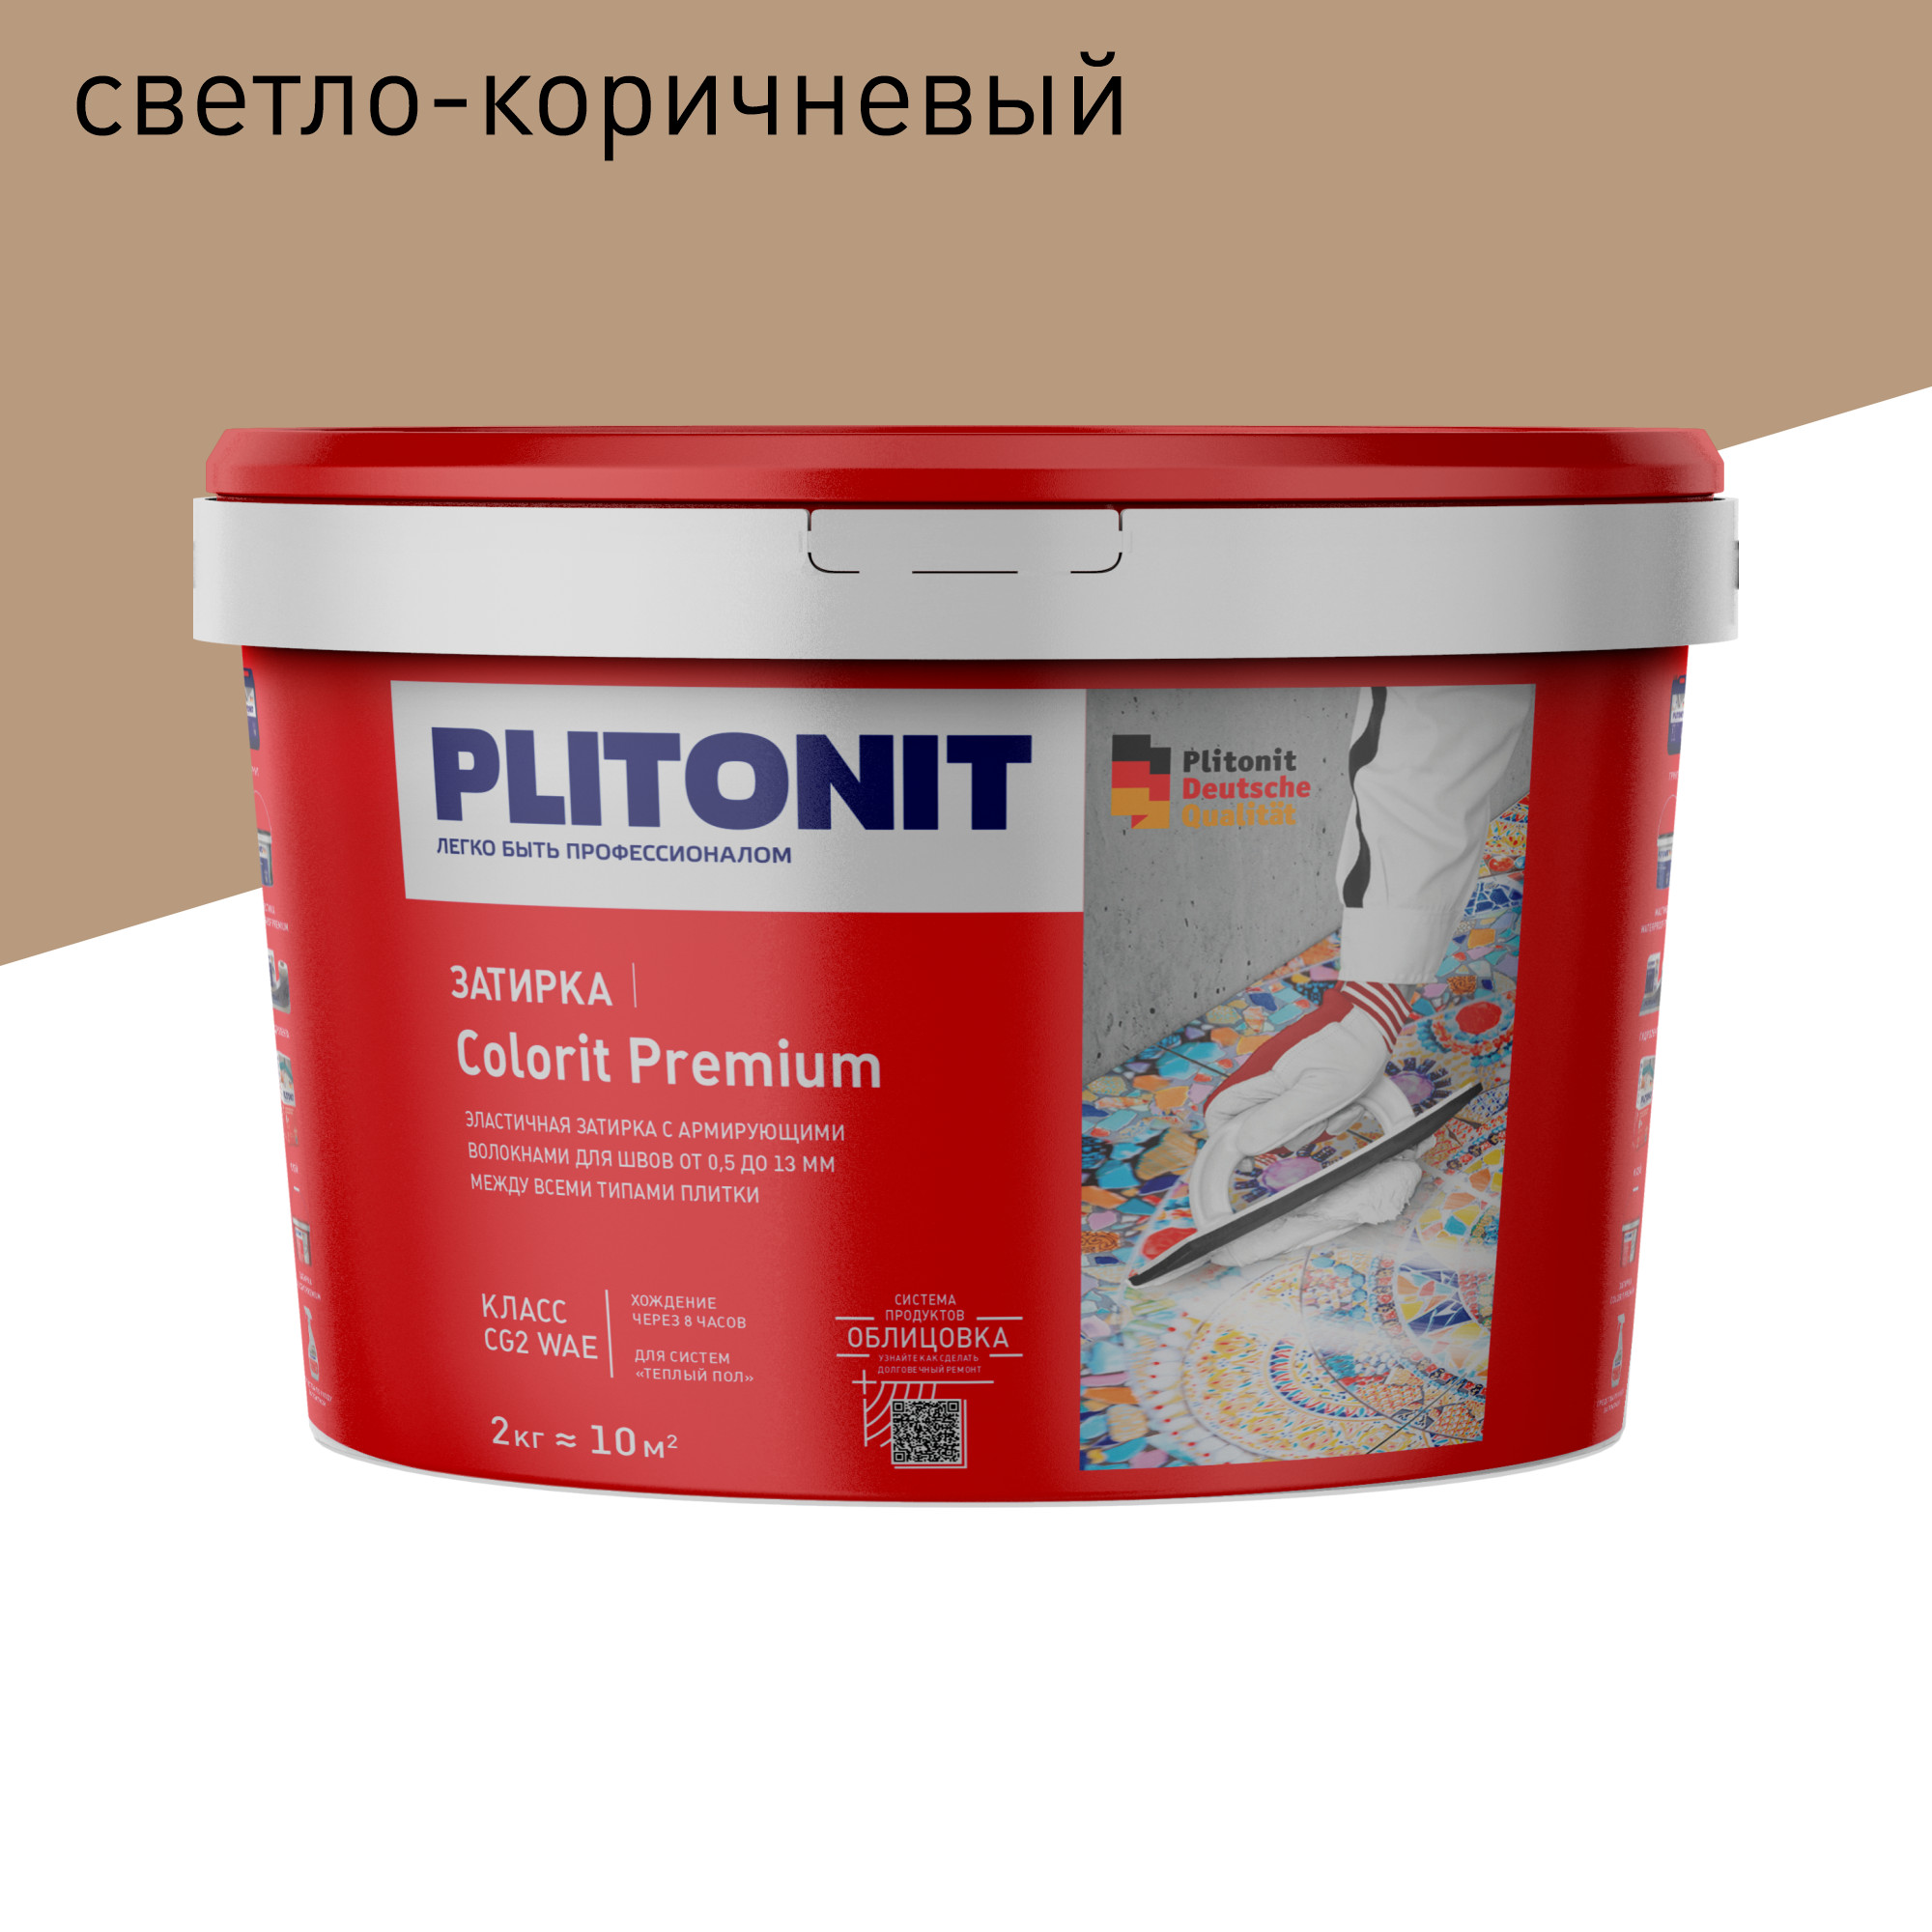 Затирка PLITONIT Colorit Premium светло-коричневая 2 кг затирка plitonit